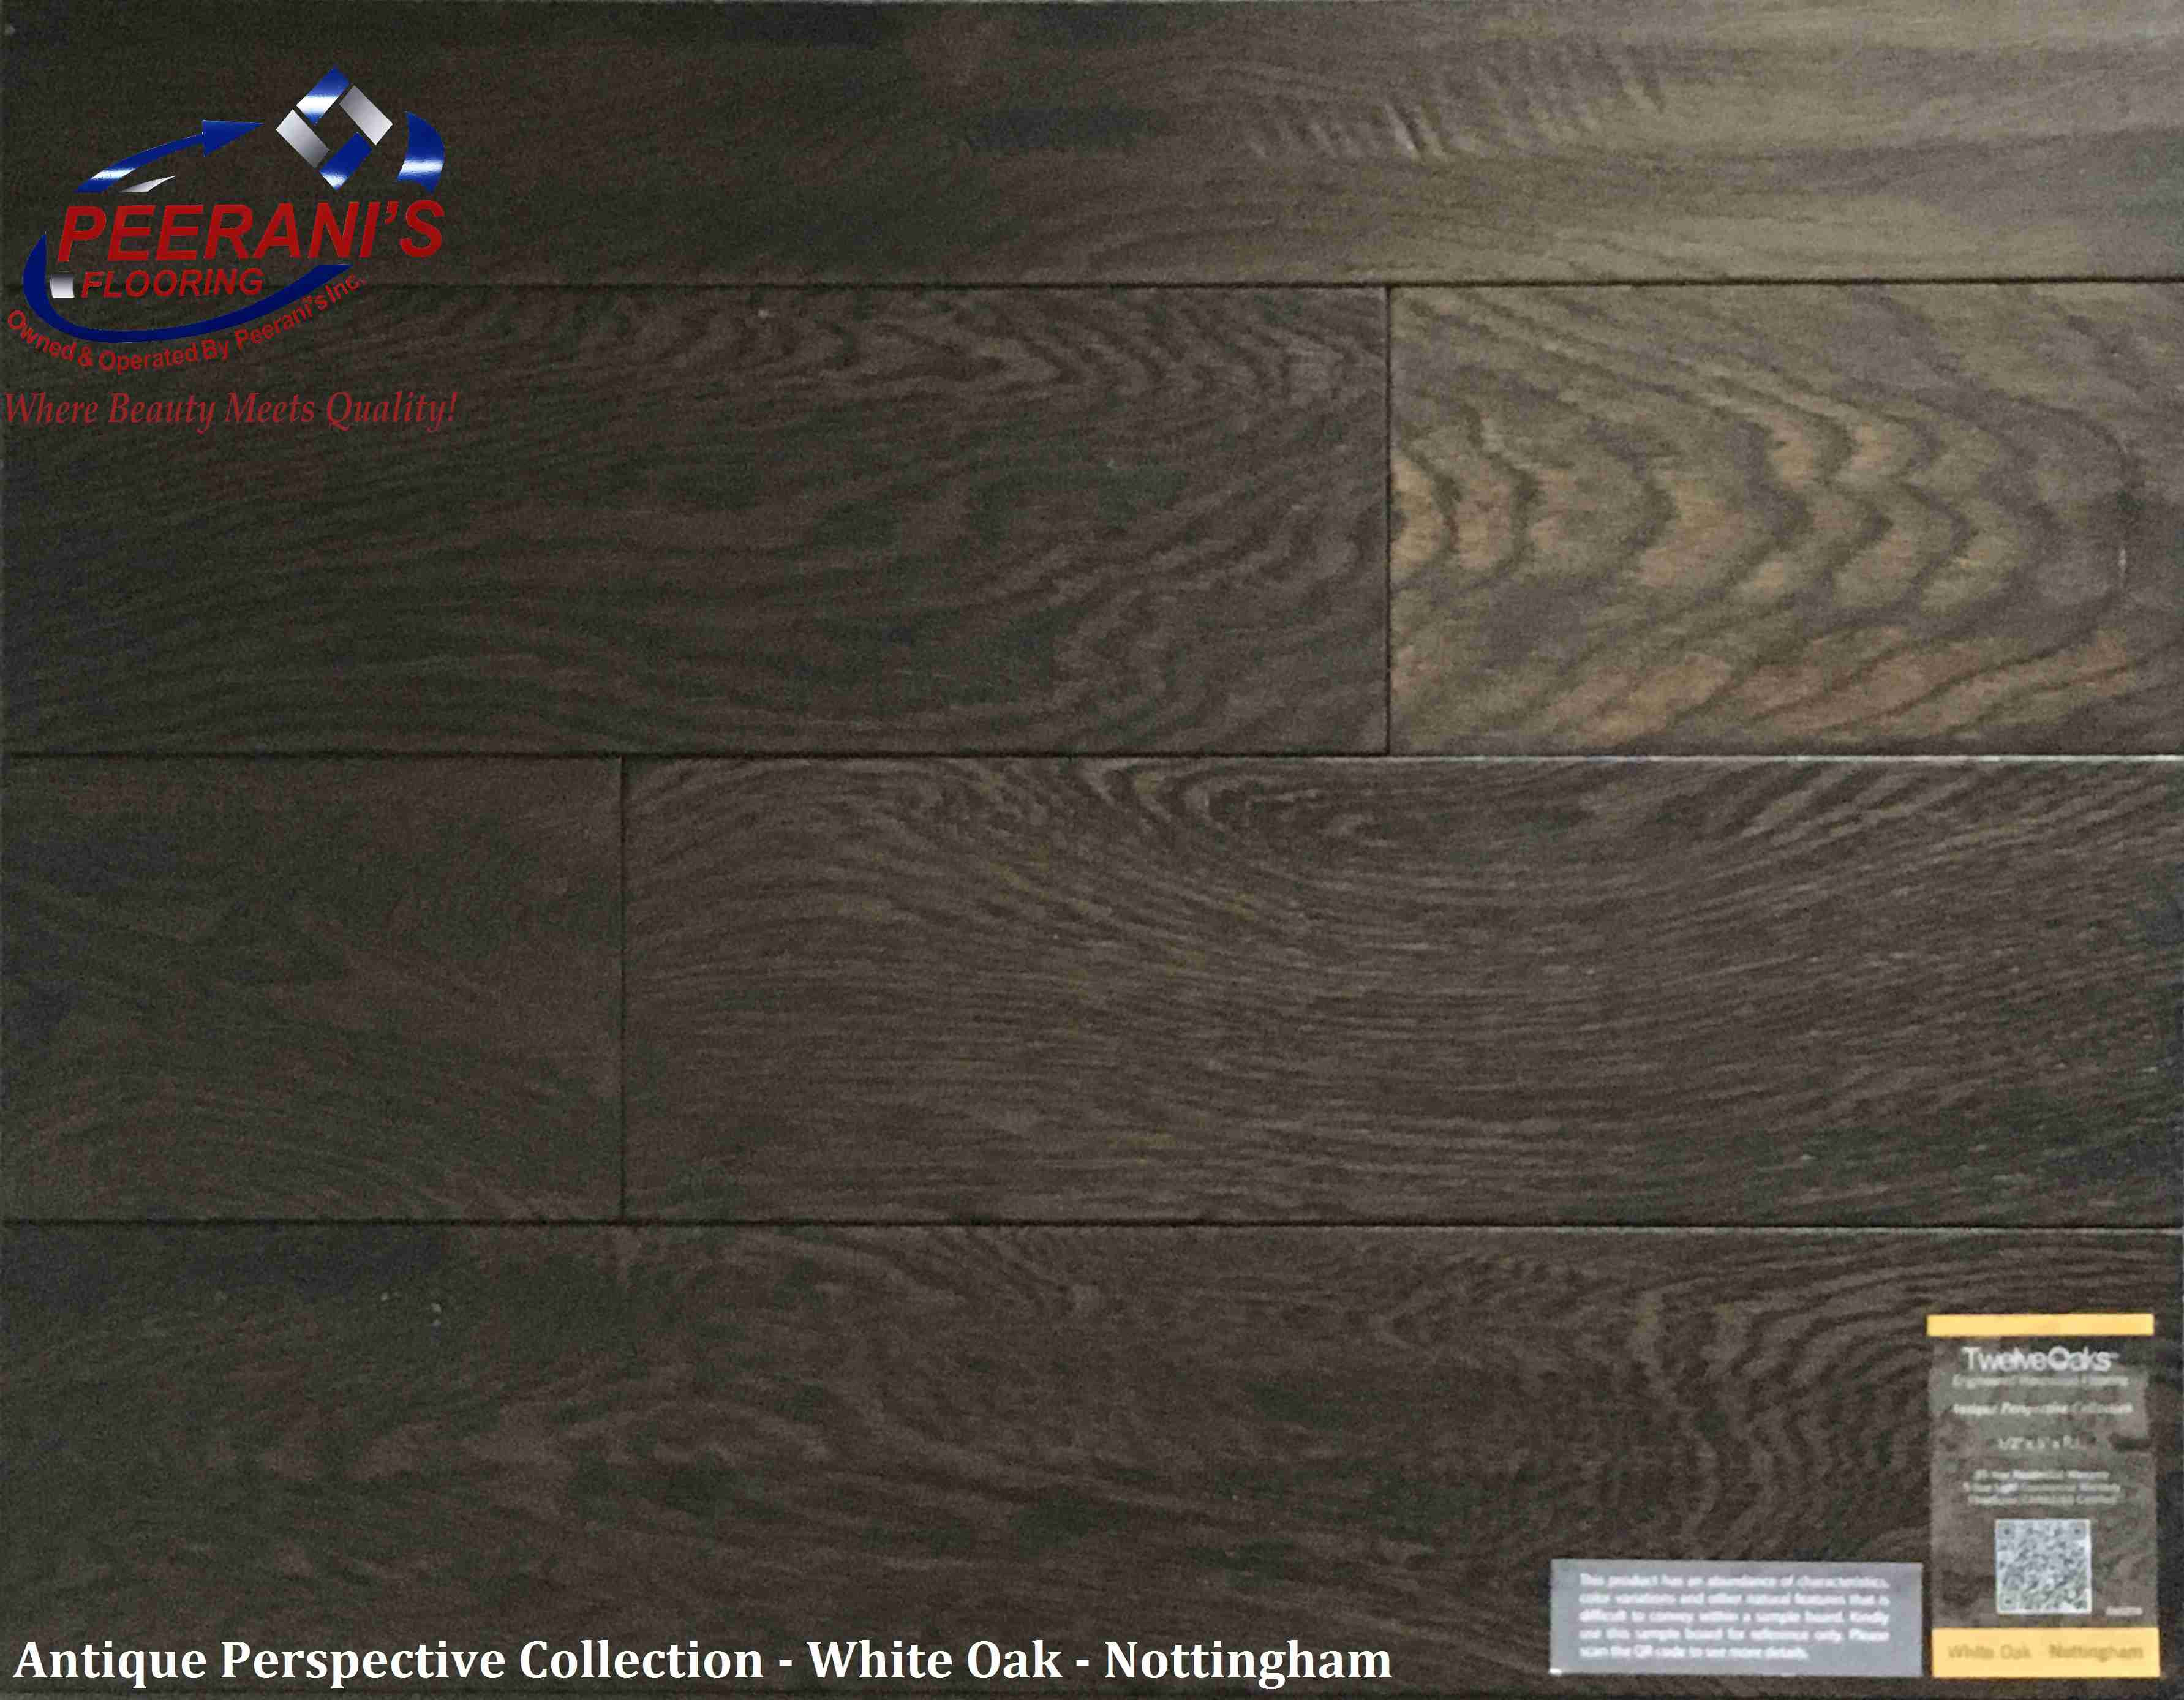 11 Great Hardwood Floor Refinishing Windsor Ontario 2022 free download hardwood floor refinishing windsor ontario of twelve oaks engineered archives page 2 of 3 peeranis regarding apc white oak nottingham